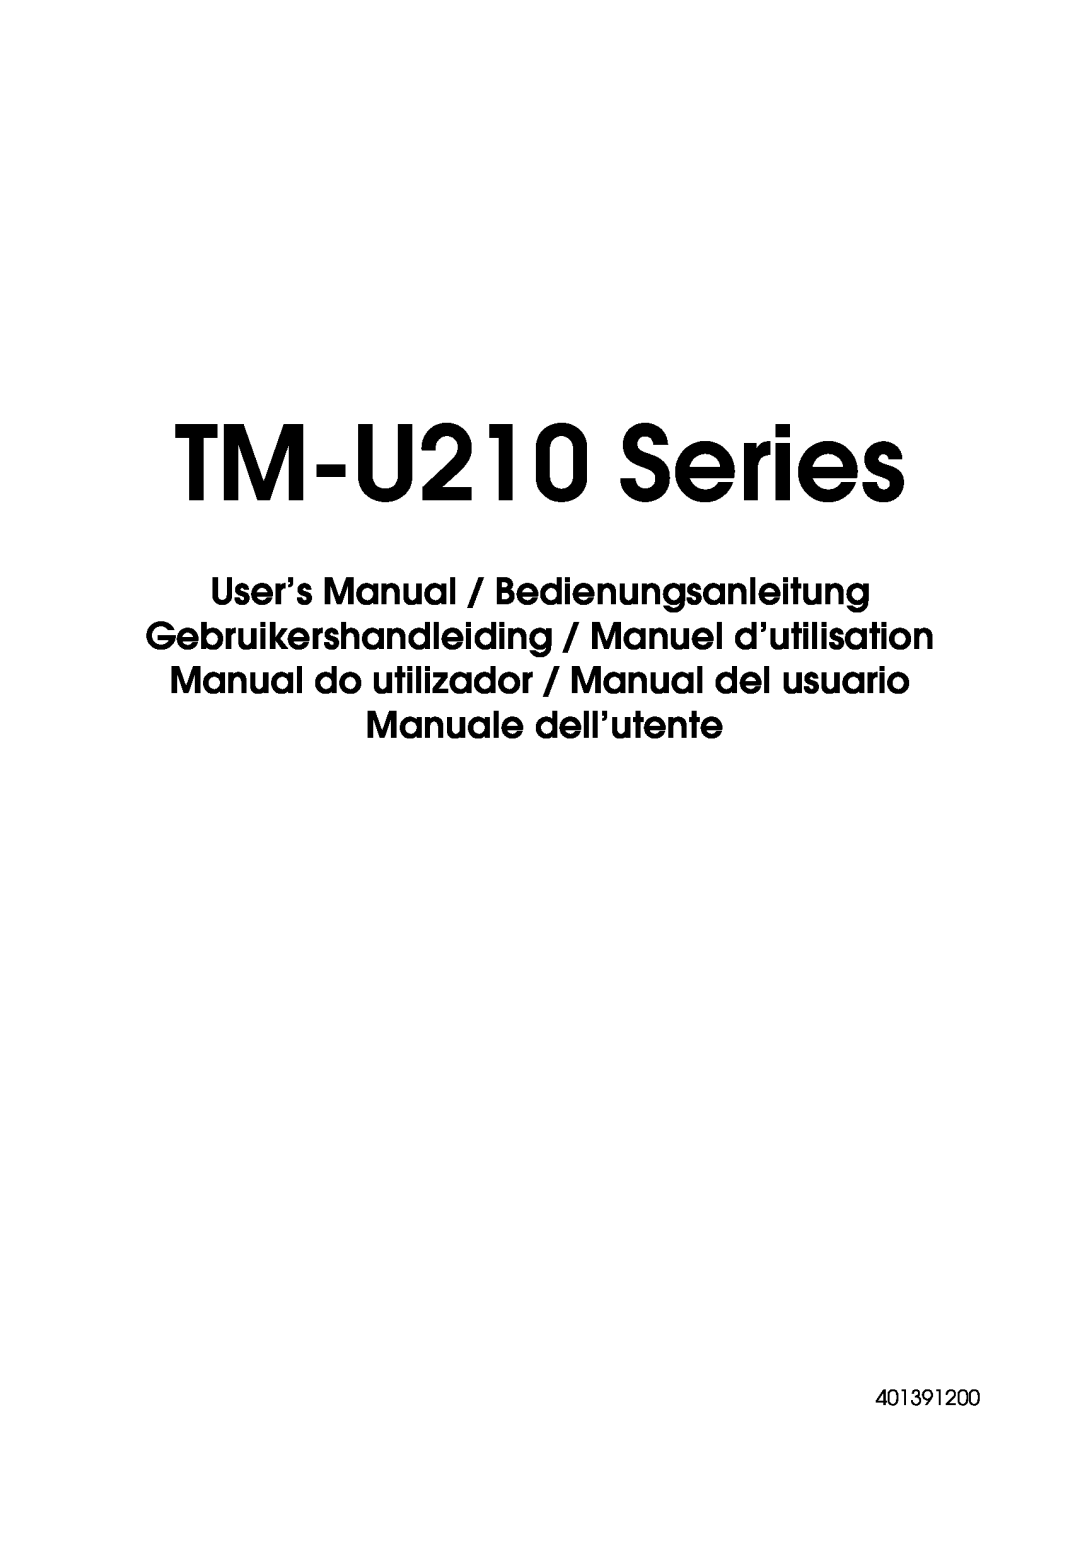 Epson M119D, M119B user manual User’s Manual / Bedienungsanleitung, TM-U210 Series User’s Manual, English, 401391200 